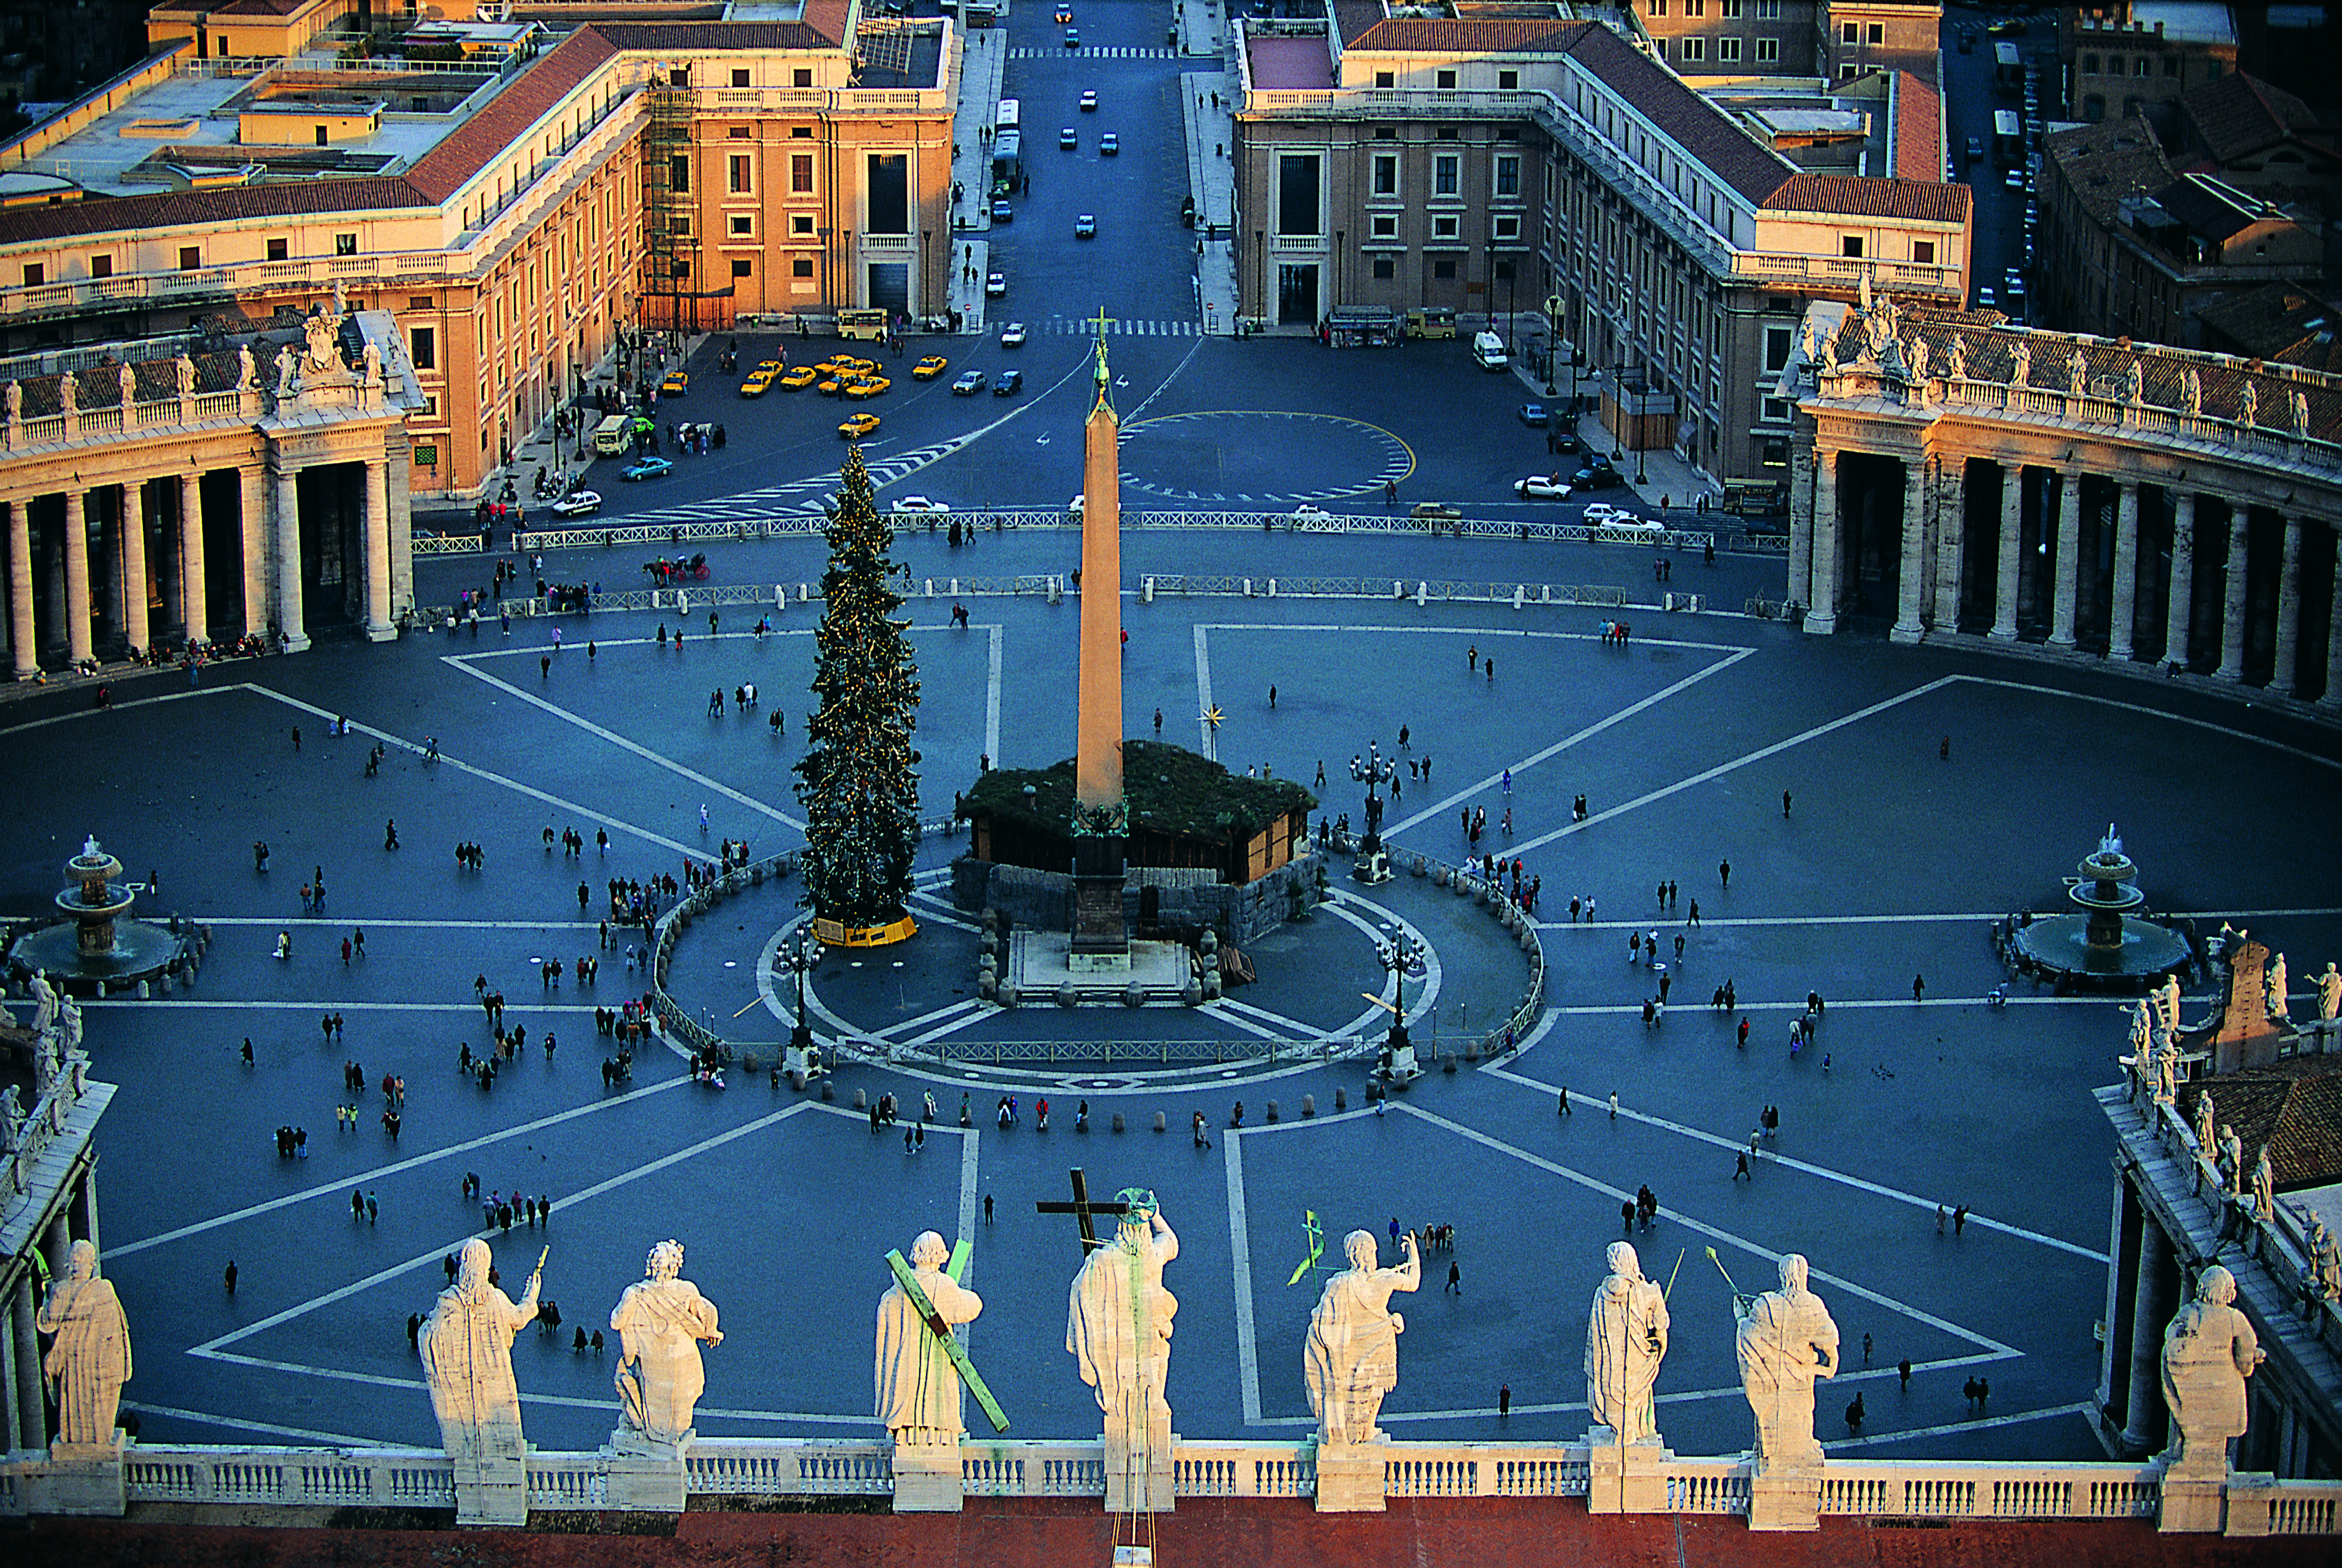 St Peter's Square, Rome